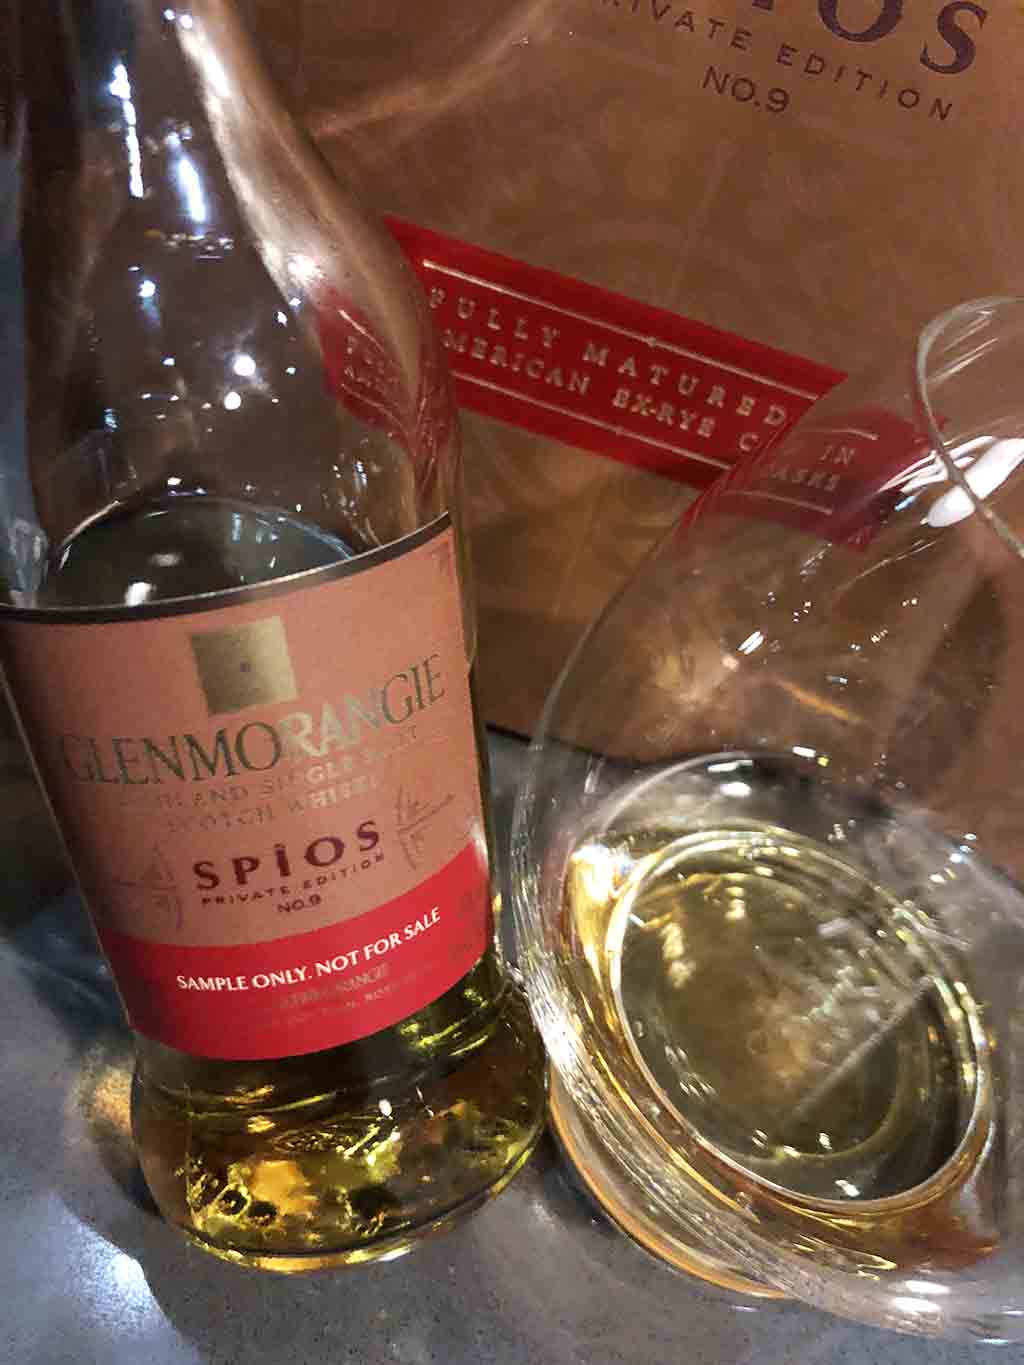 Review: Glenmorangie Spios Single Malt Whisky